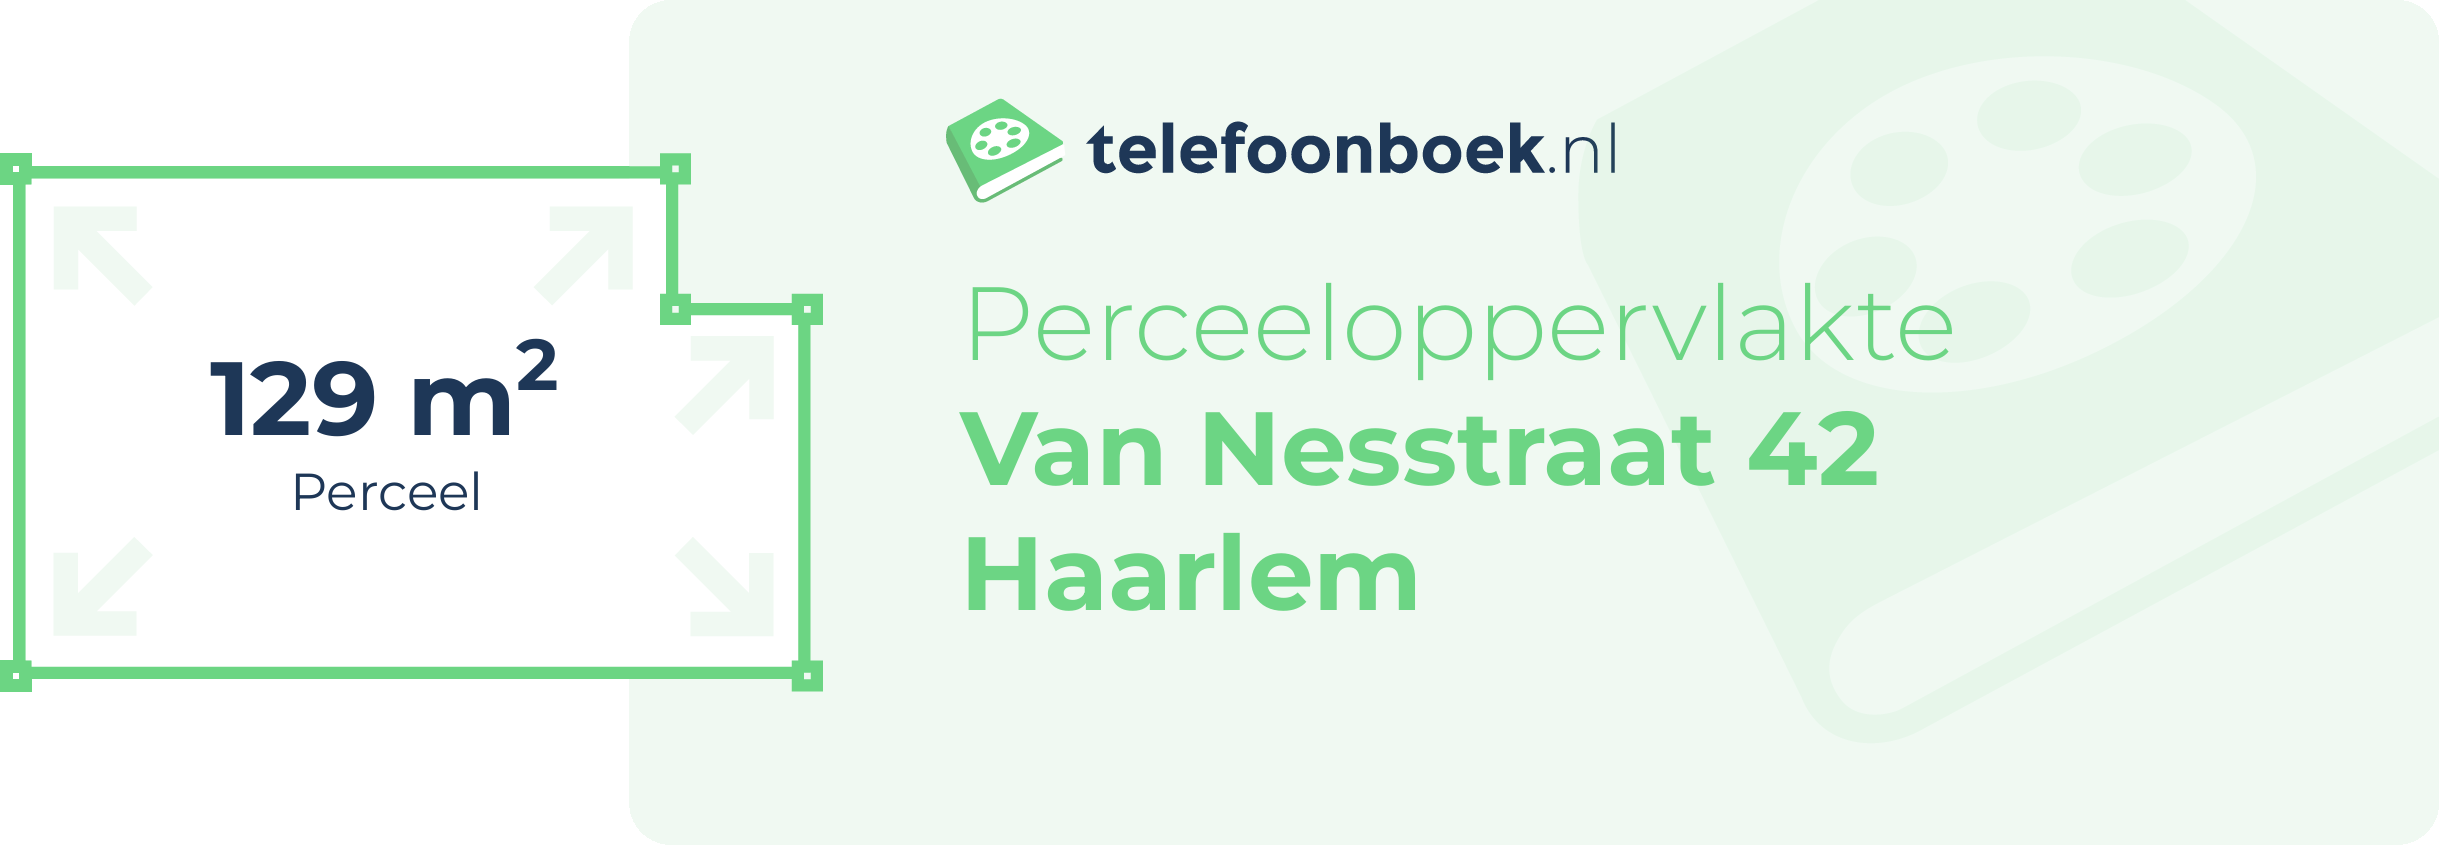 Perceeloppervlakte Van Nesstraat 42 Haarlem